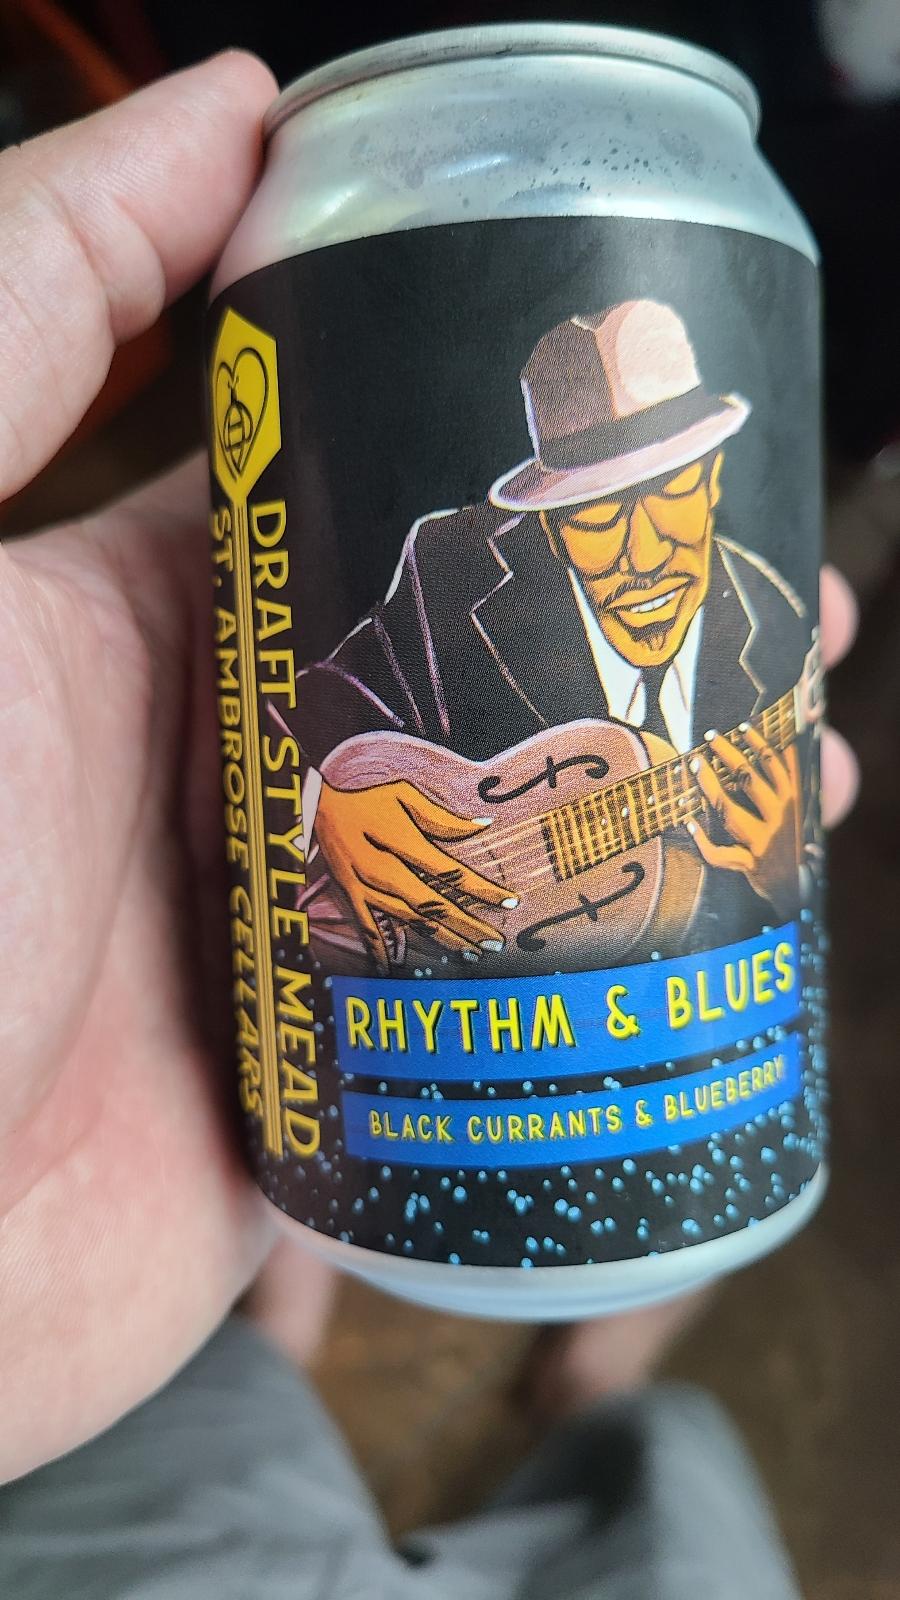 Rhythm & Blues - Black Currants & Blueberry